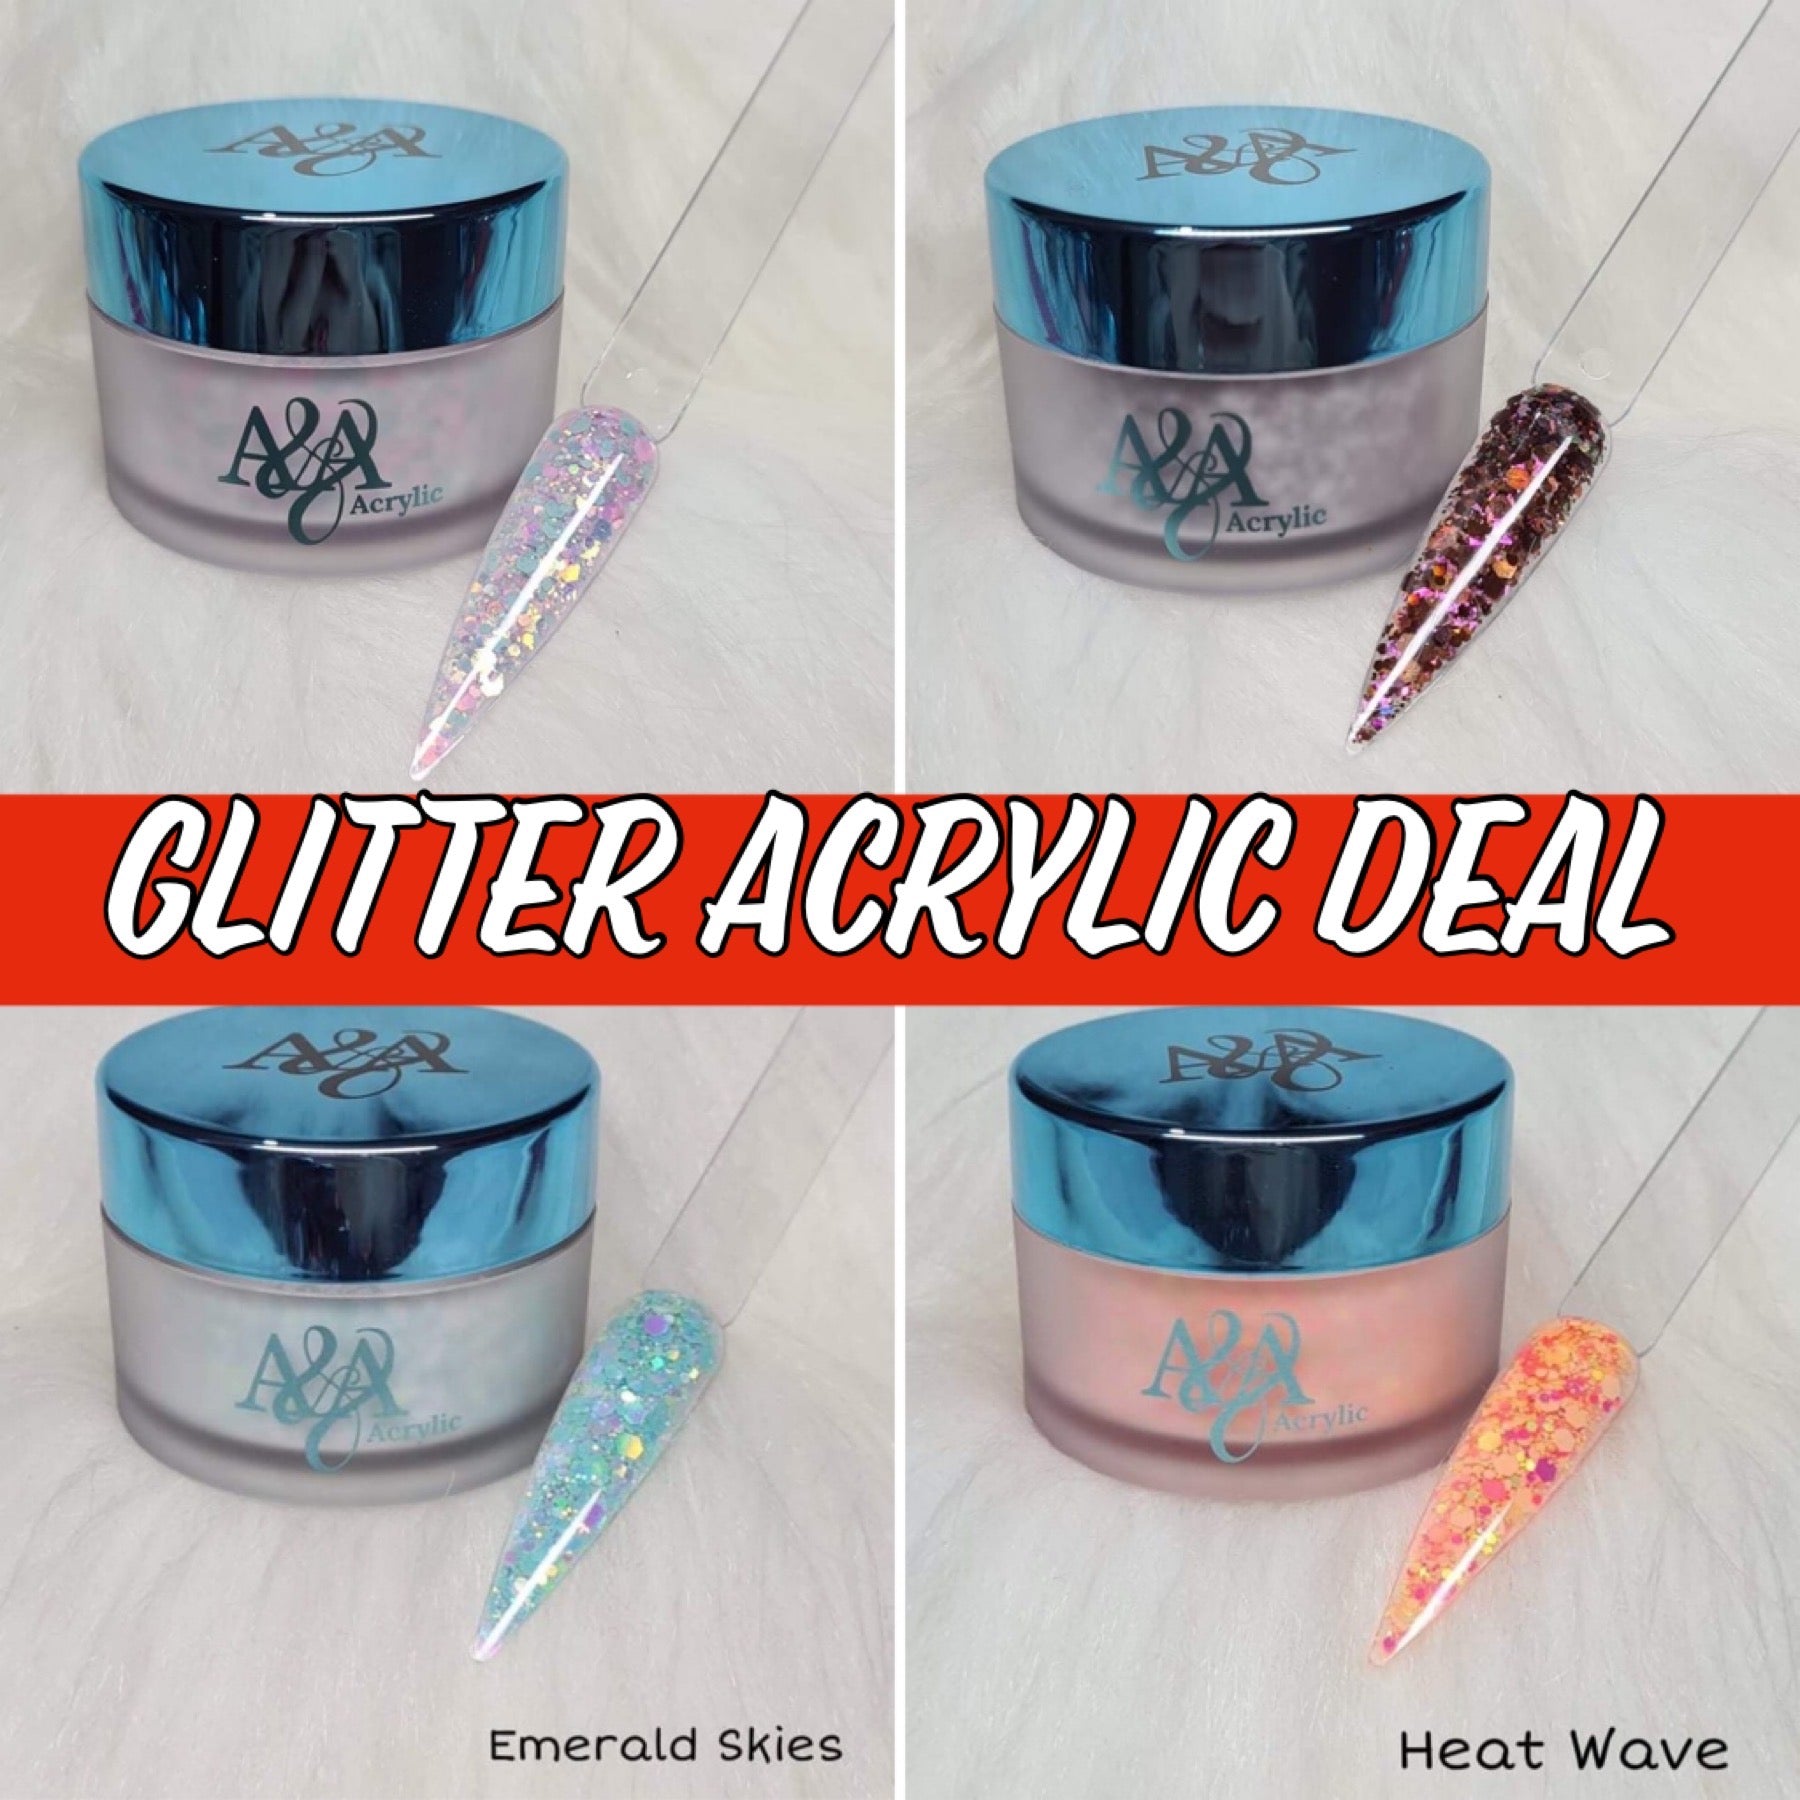 Glitter Acrylic Clearance Bundle